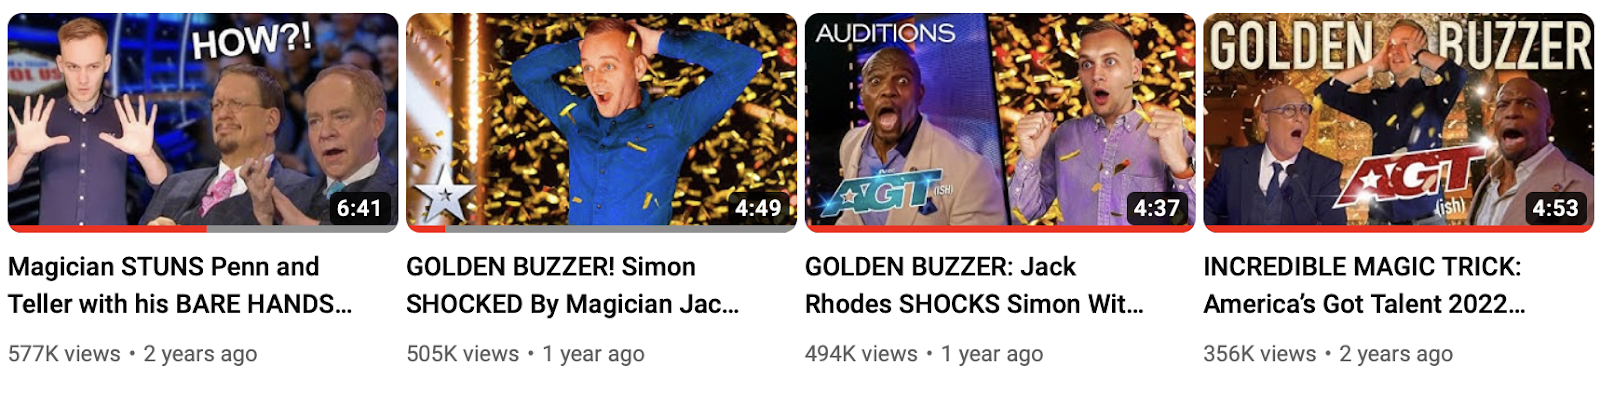 Screenshot of Jack's parody YouTube videos